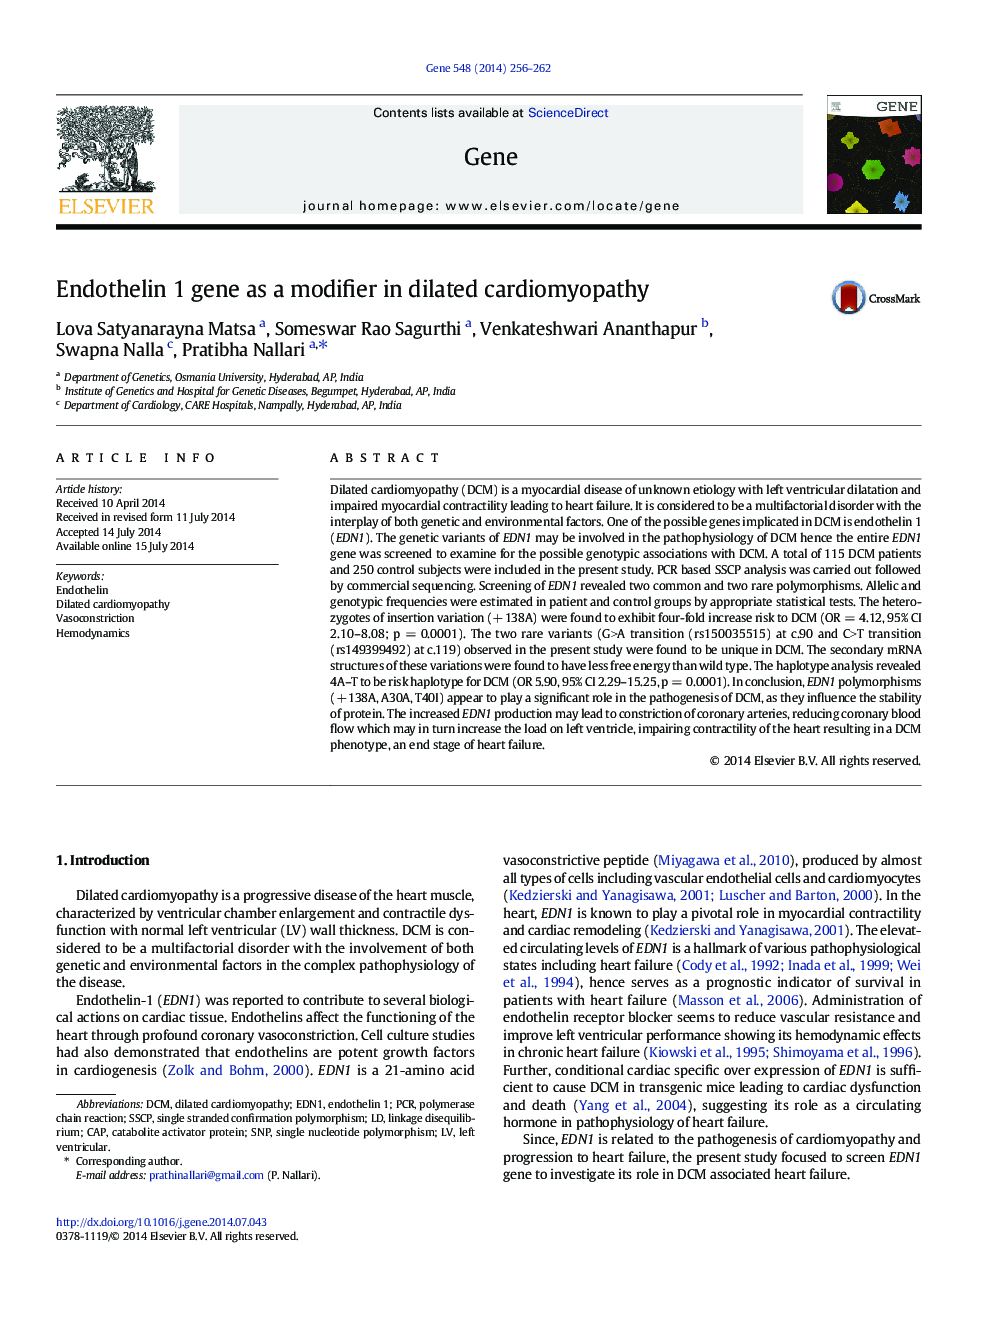 Endothelin 1 gene as a modifier in dilated cardiomyopathy